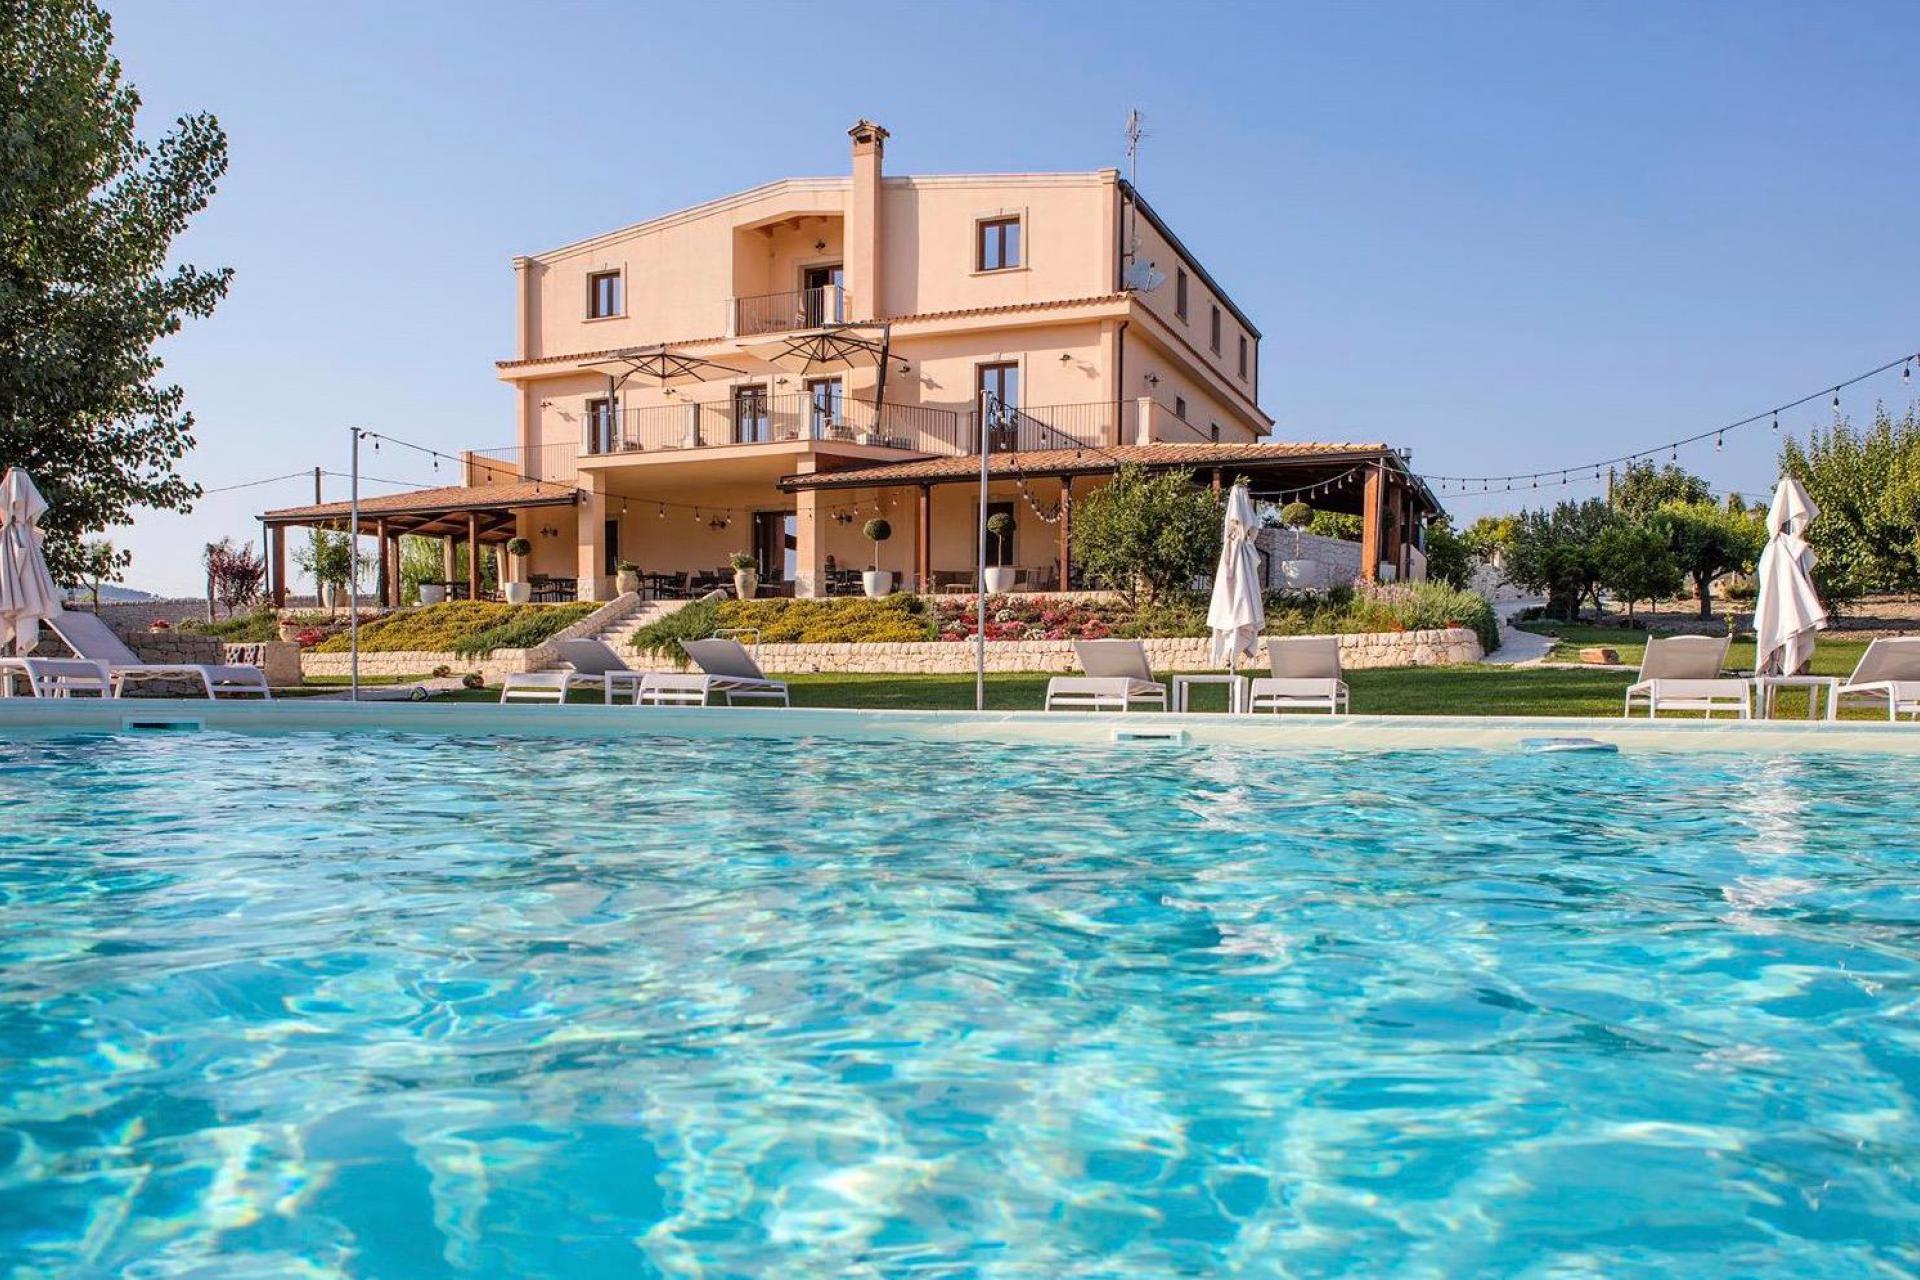 Agriturismo Sicilie Familievriendelijke agriturismo op Sicilië met groot zwembad